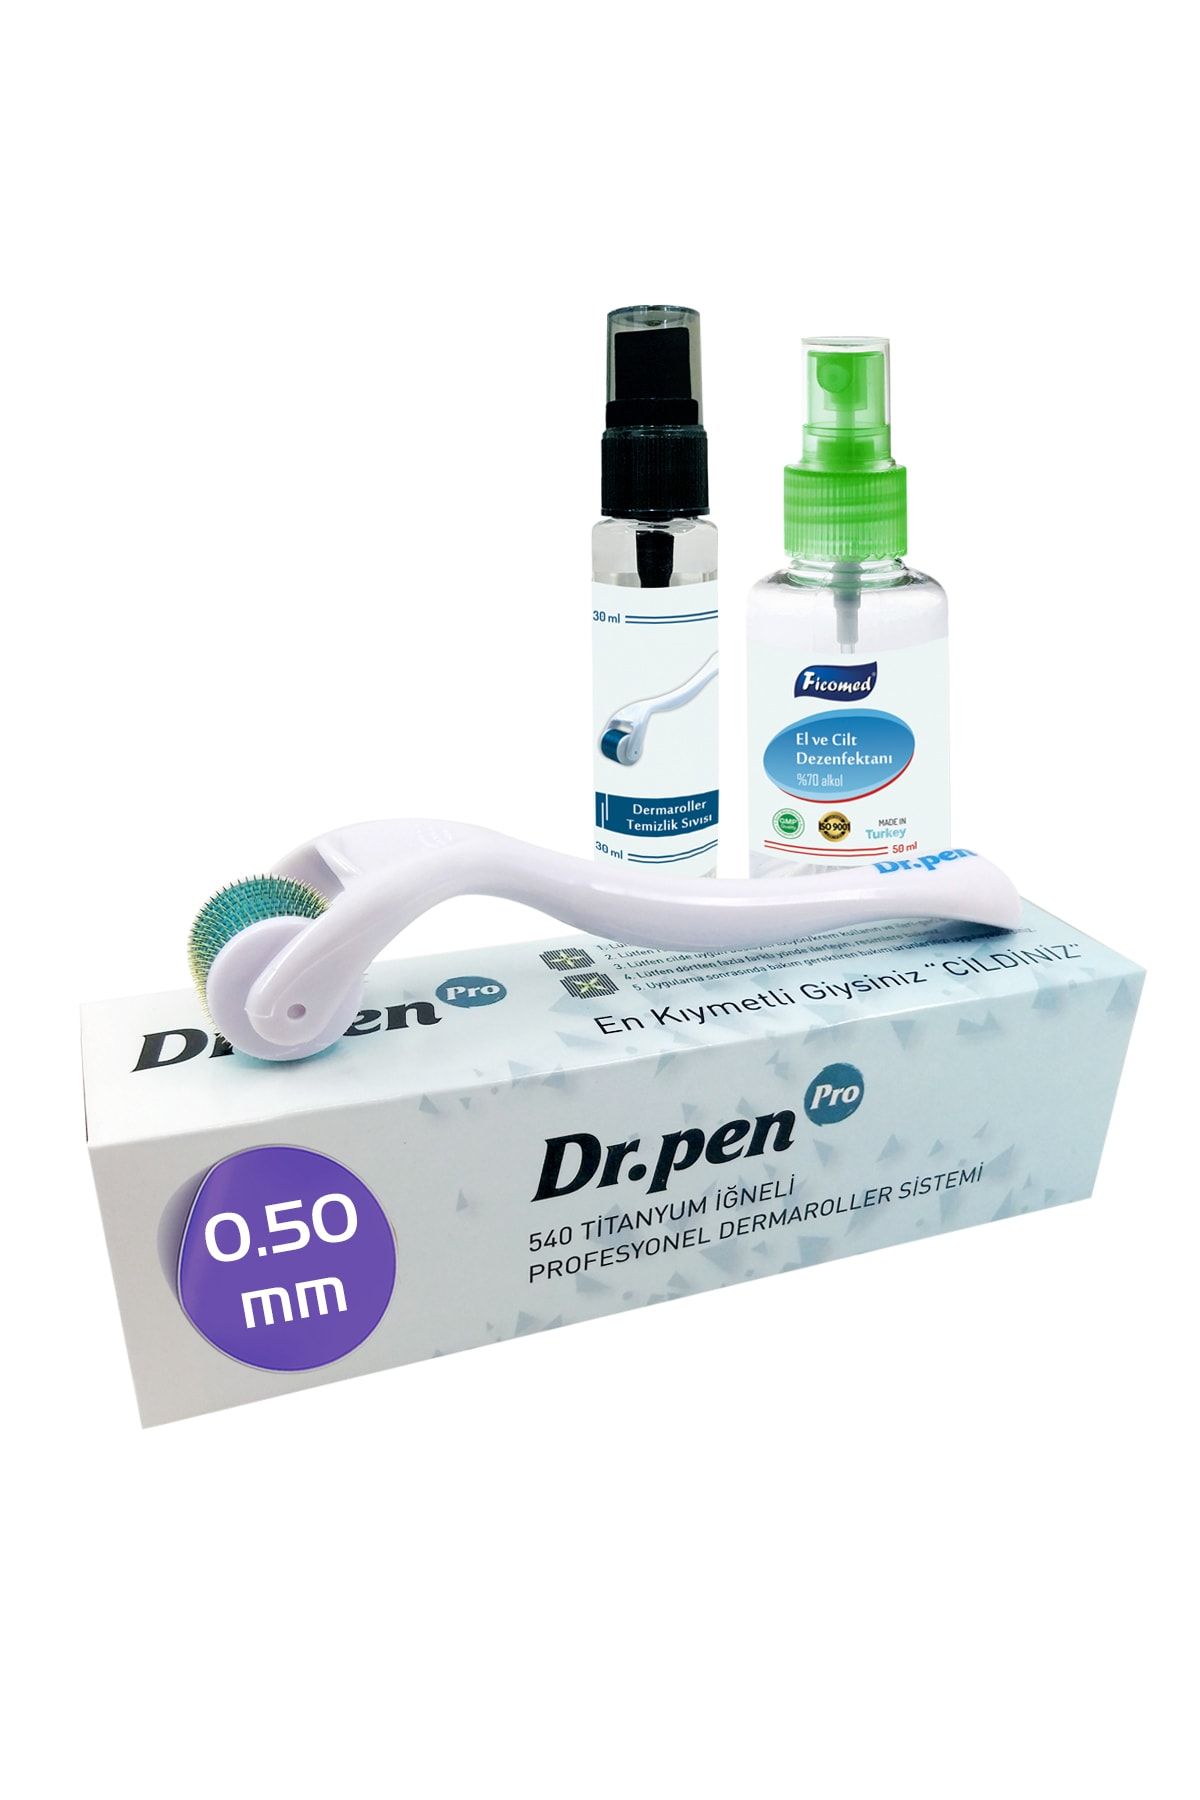 Dr.Pen Dermaroller Titanyum 540 Iğne 0.50mm Orijinal Derma Roller Dezenfektan Hediyeli